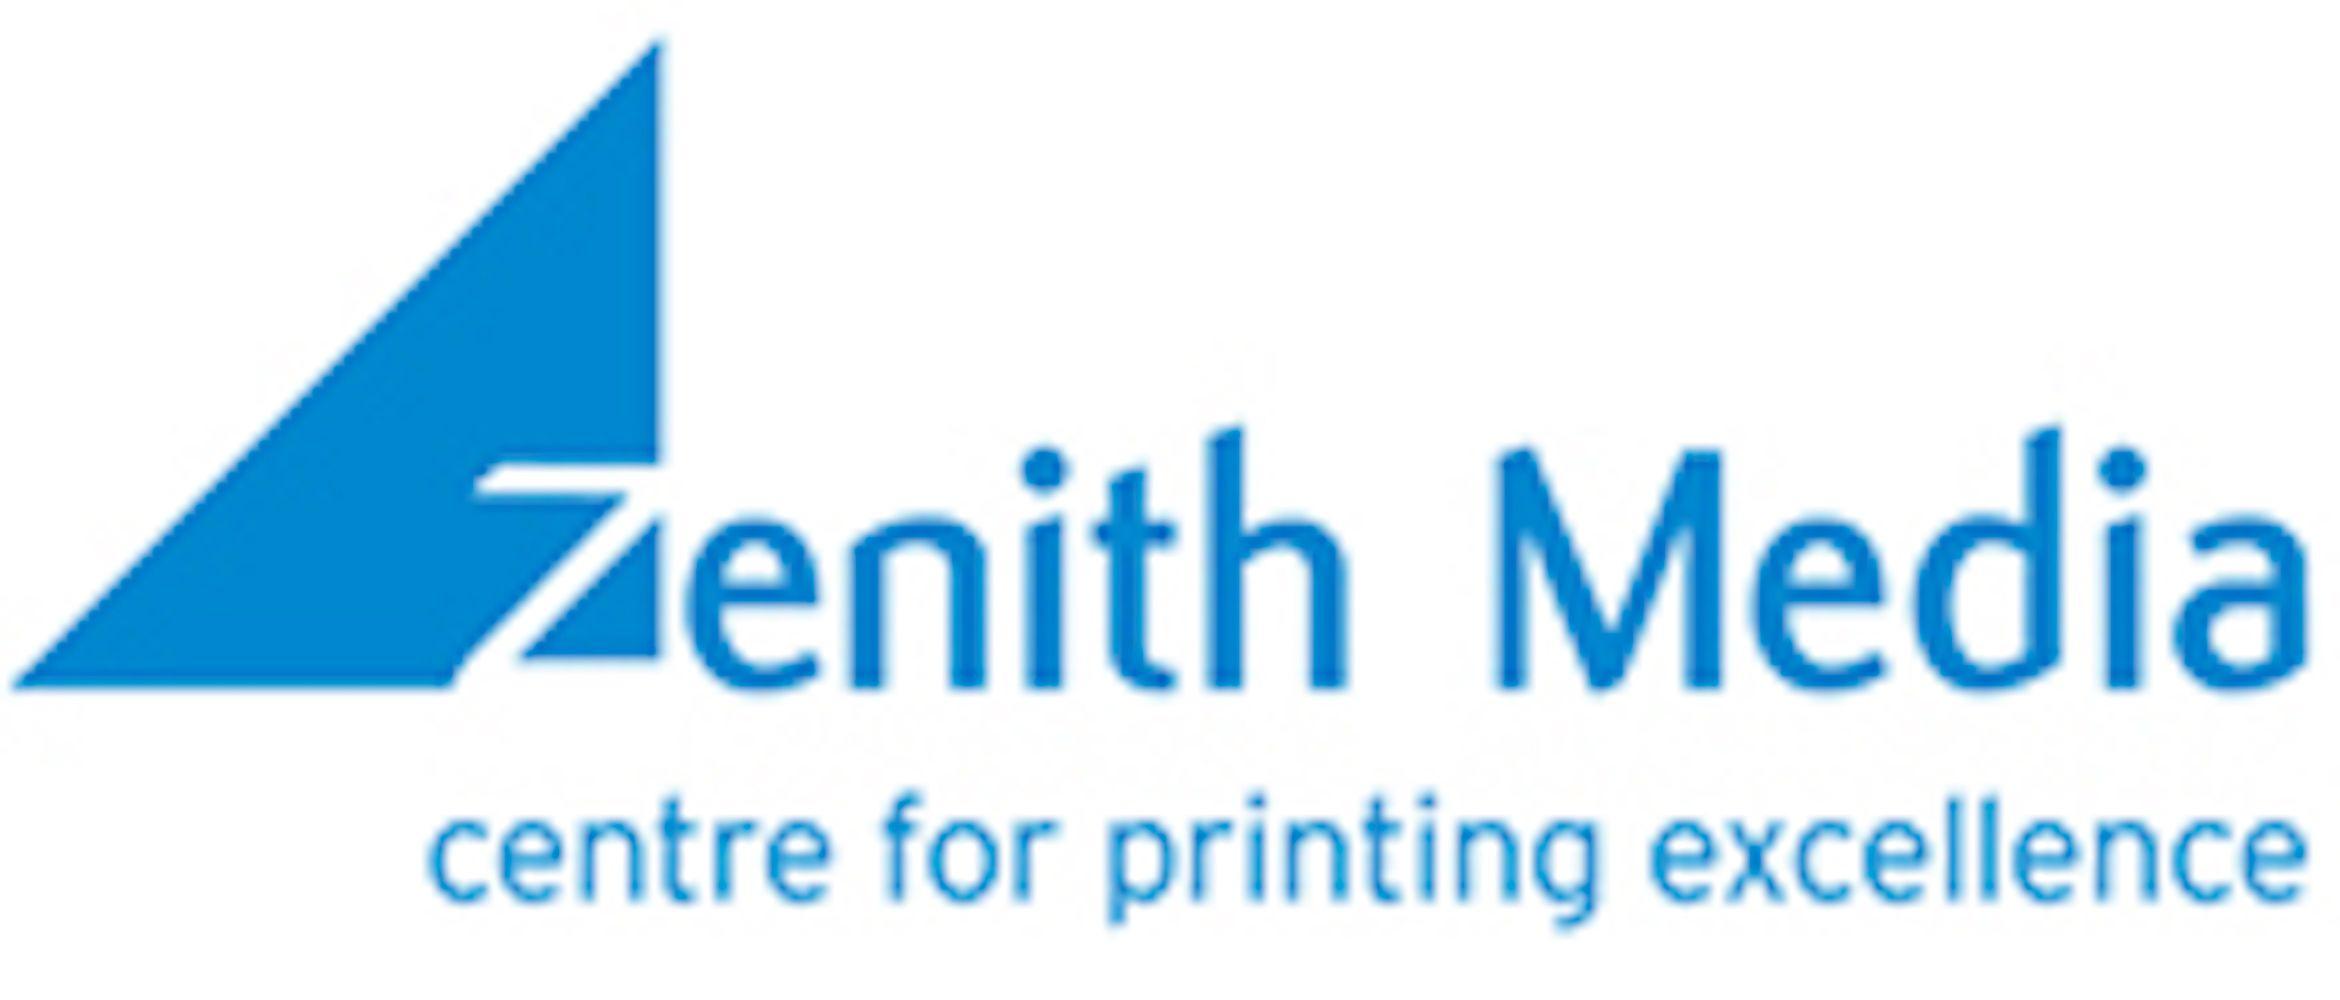 Zenith Media Logo - logo – Zenith Media